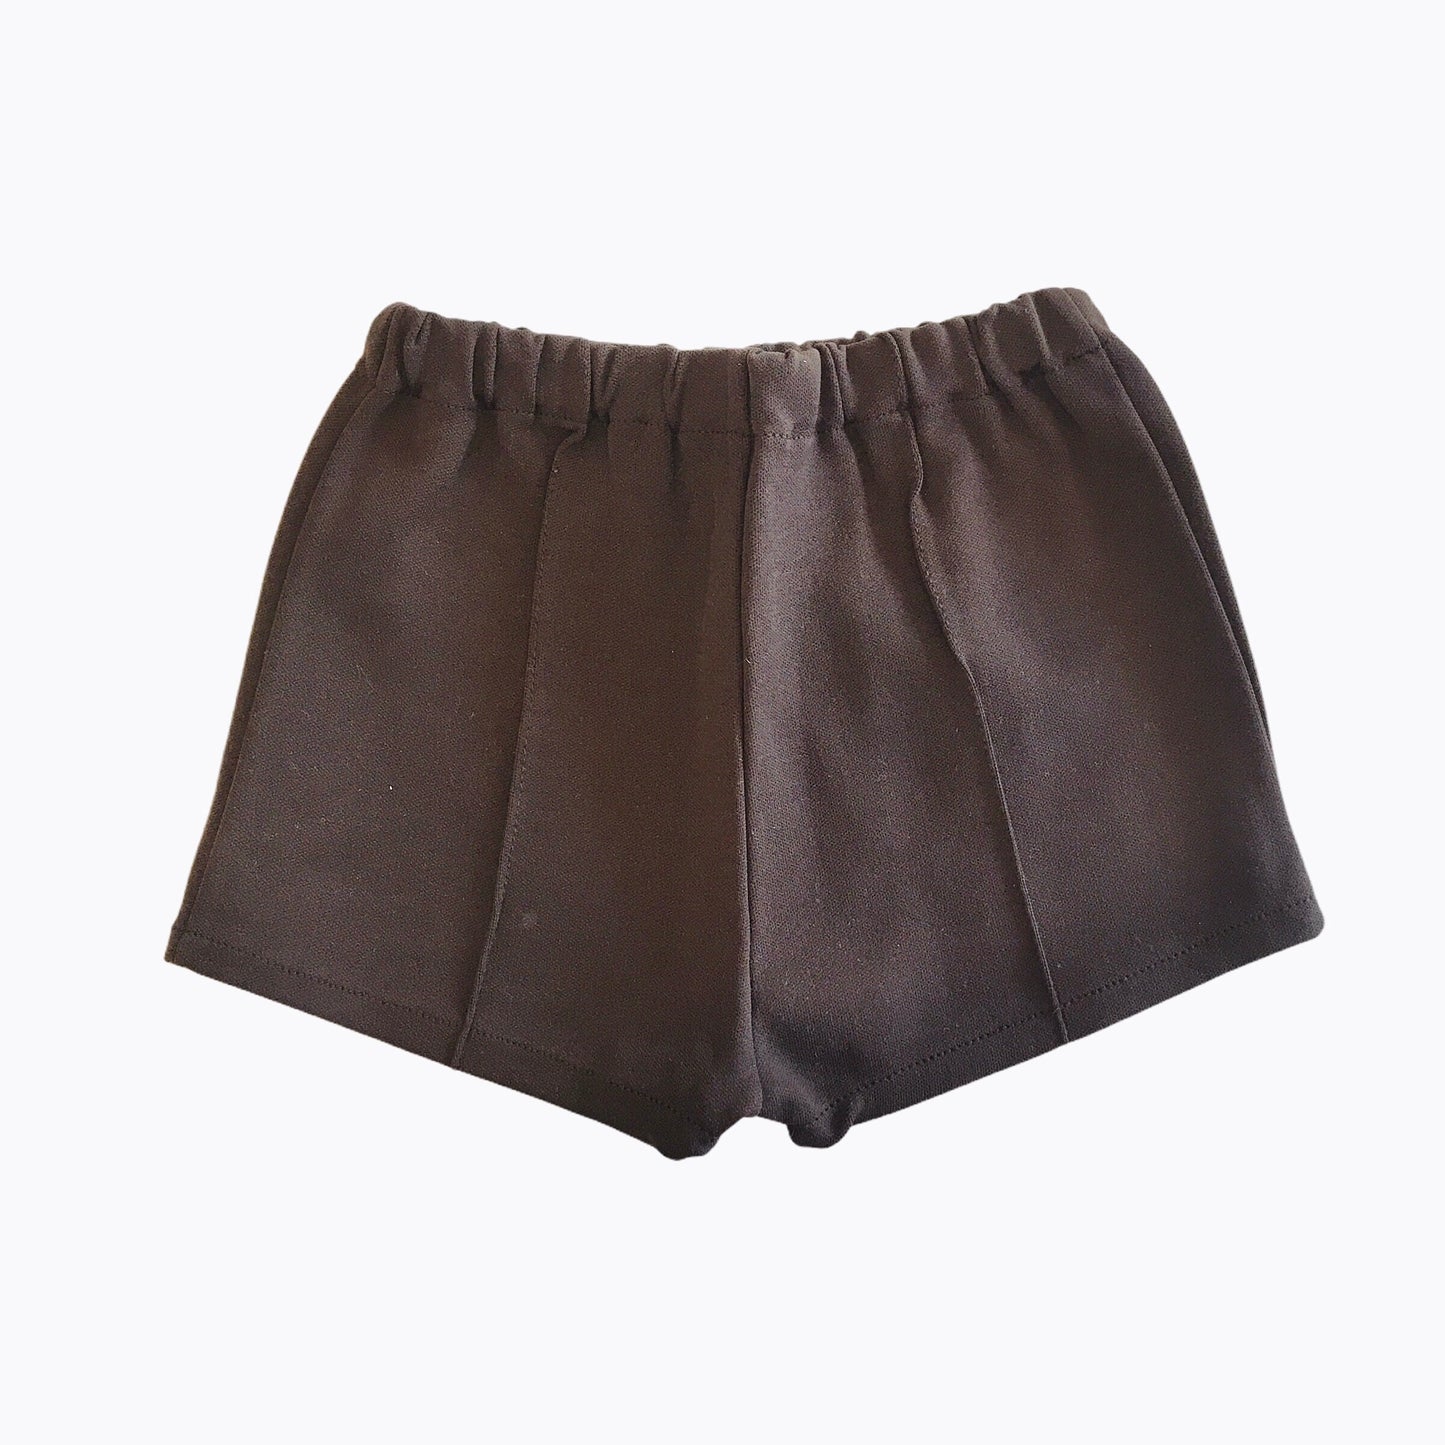 Vintage 1960s Brown Nylon Shorts 18-24M